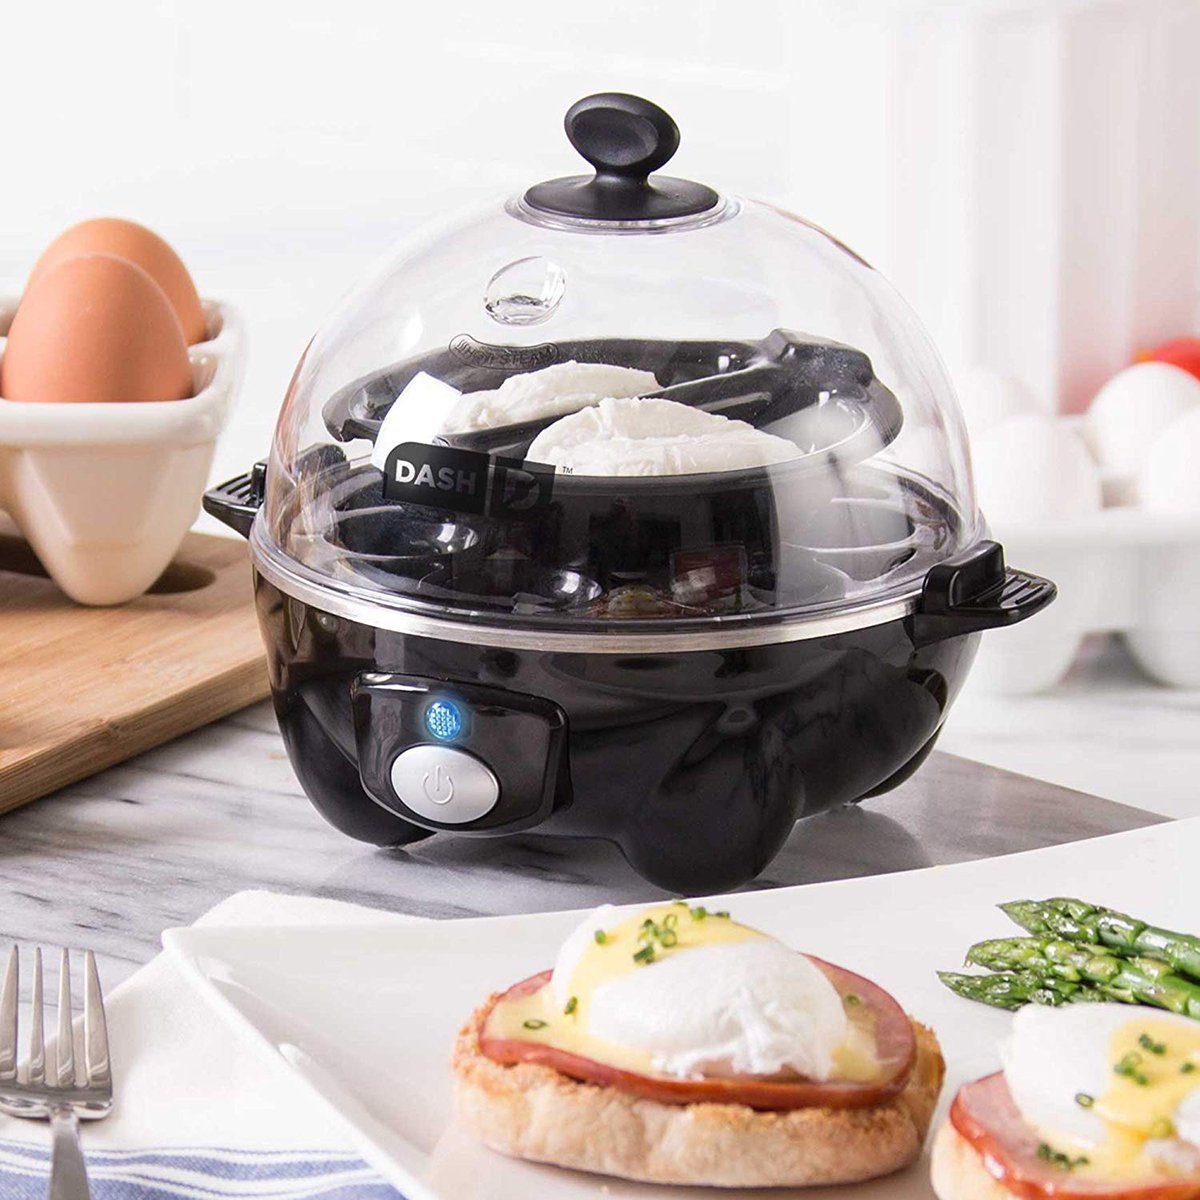 https://www.familyhandyman.com/wp-content/uploads/2019/07/dash-rapid-egg-cooker.jpg?fit=696%2C696